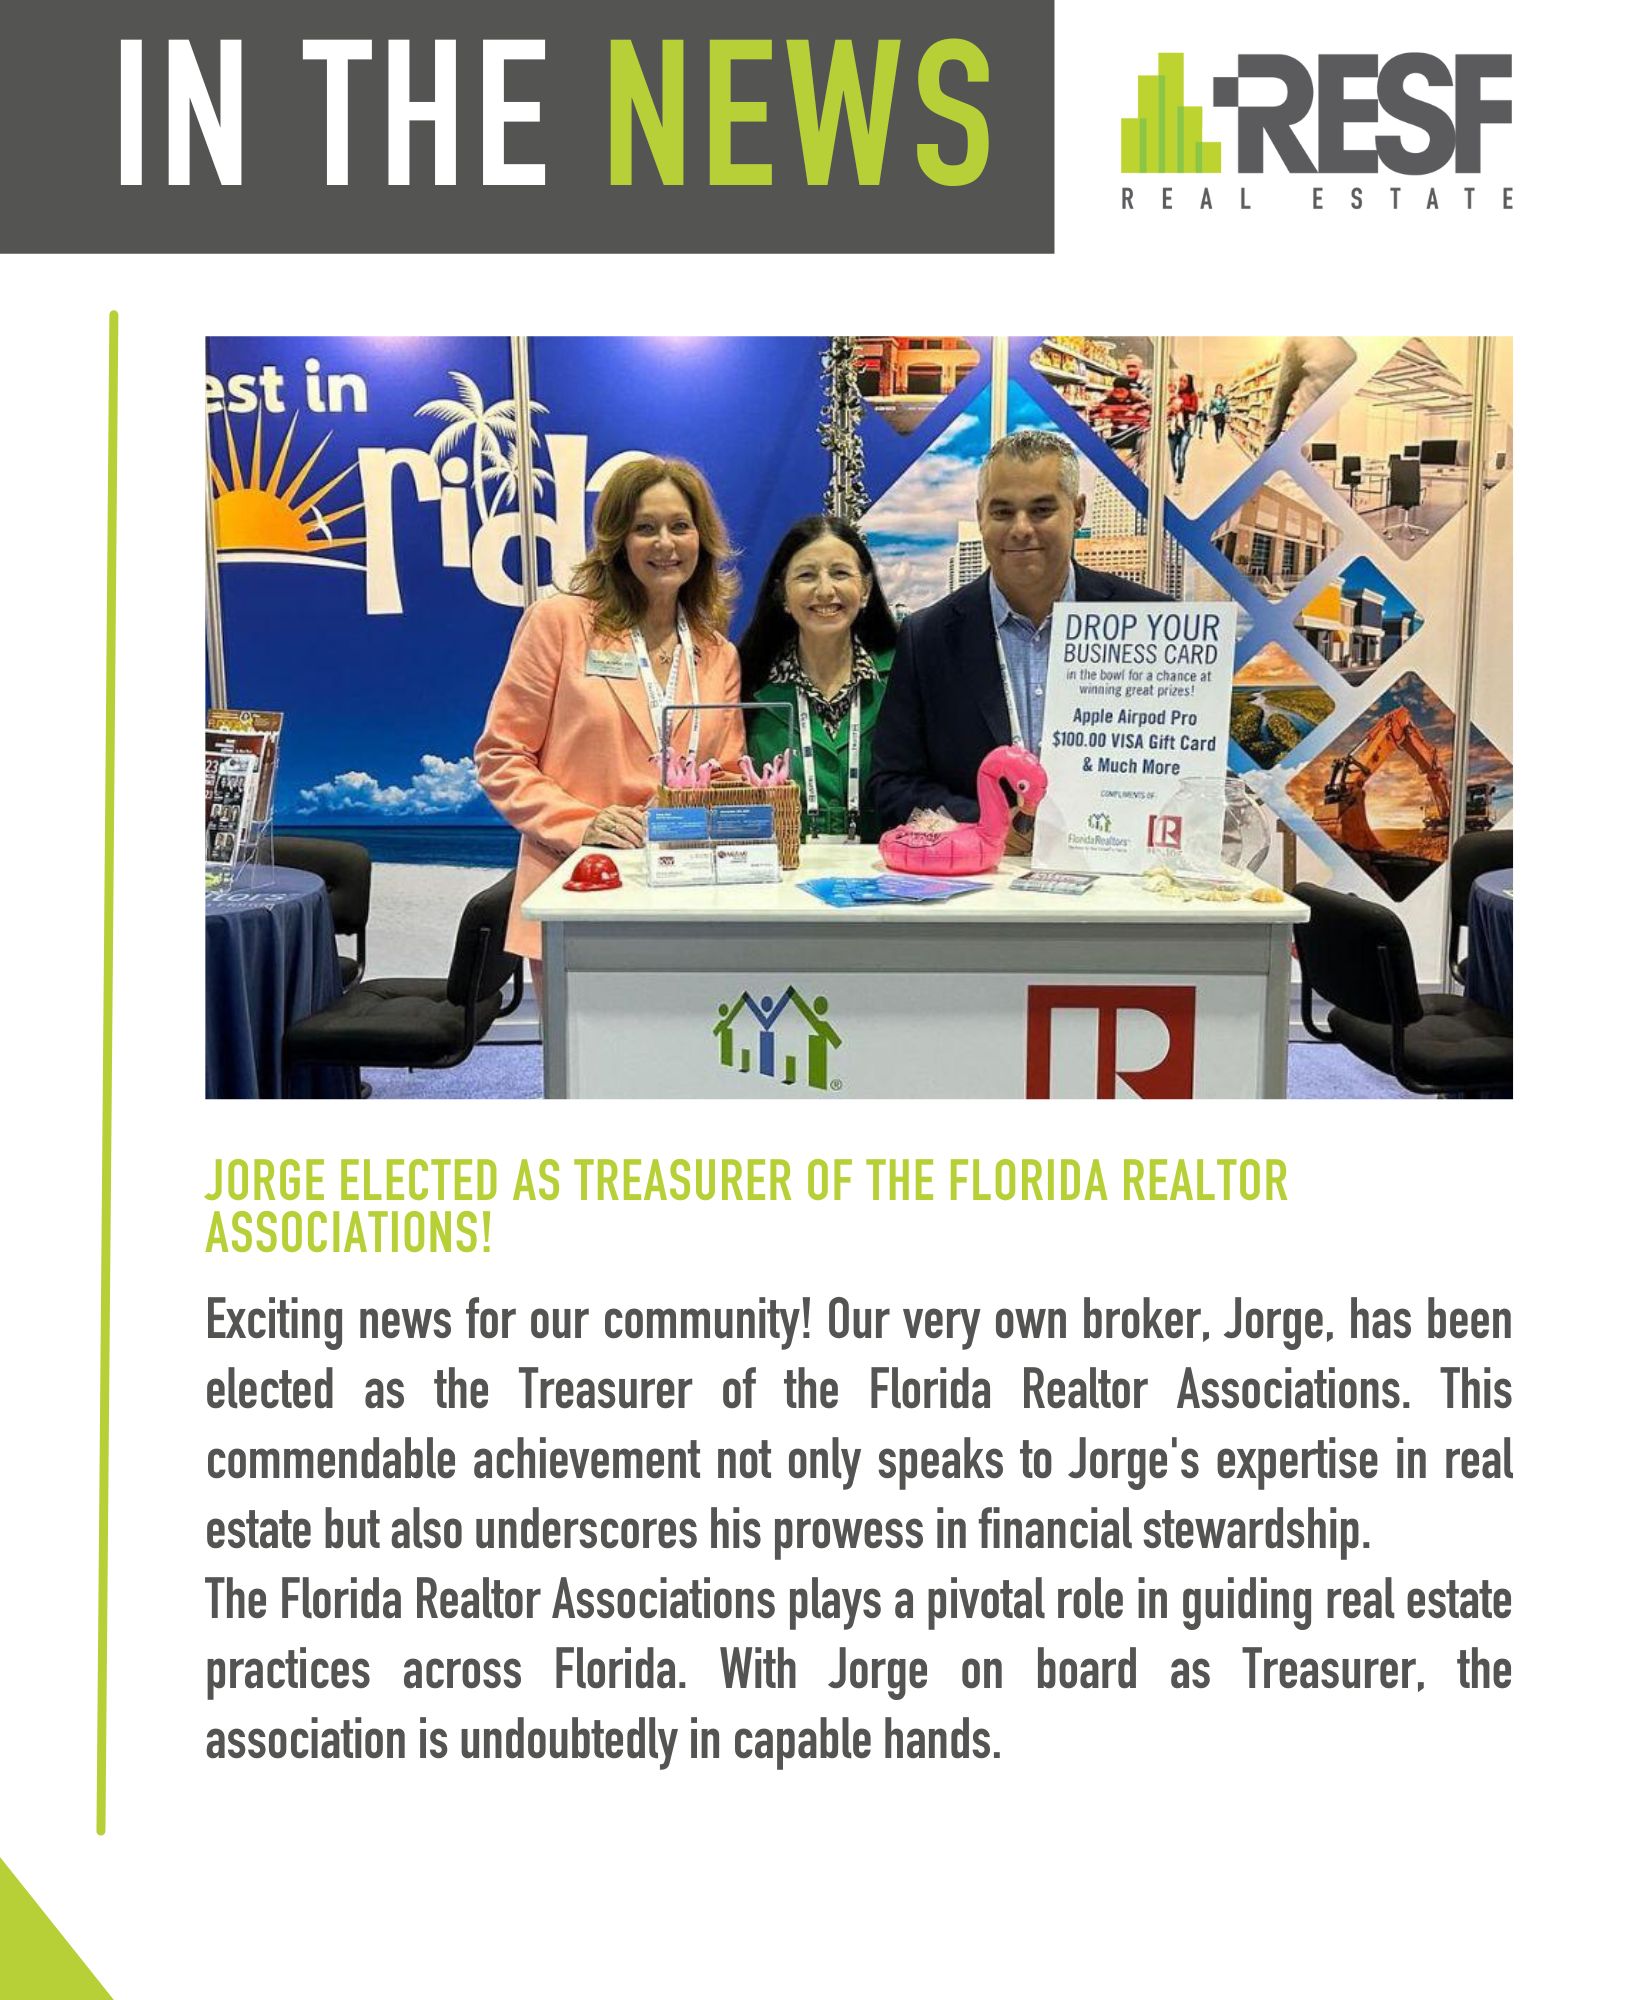 Jorge Elected as Treasurer of the Florida Realtor Associations!